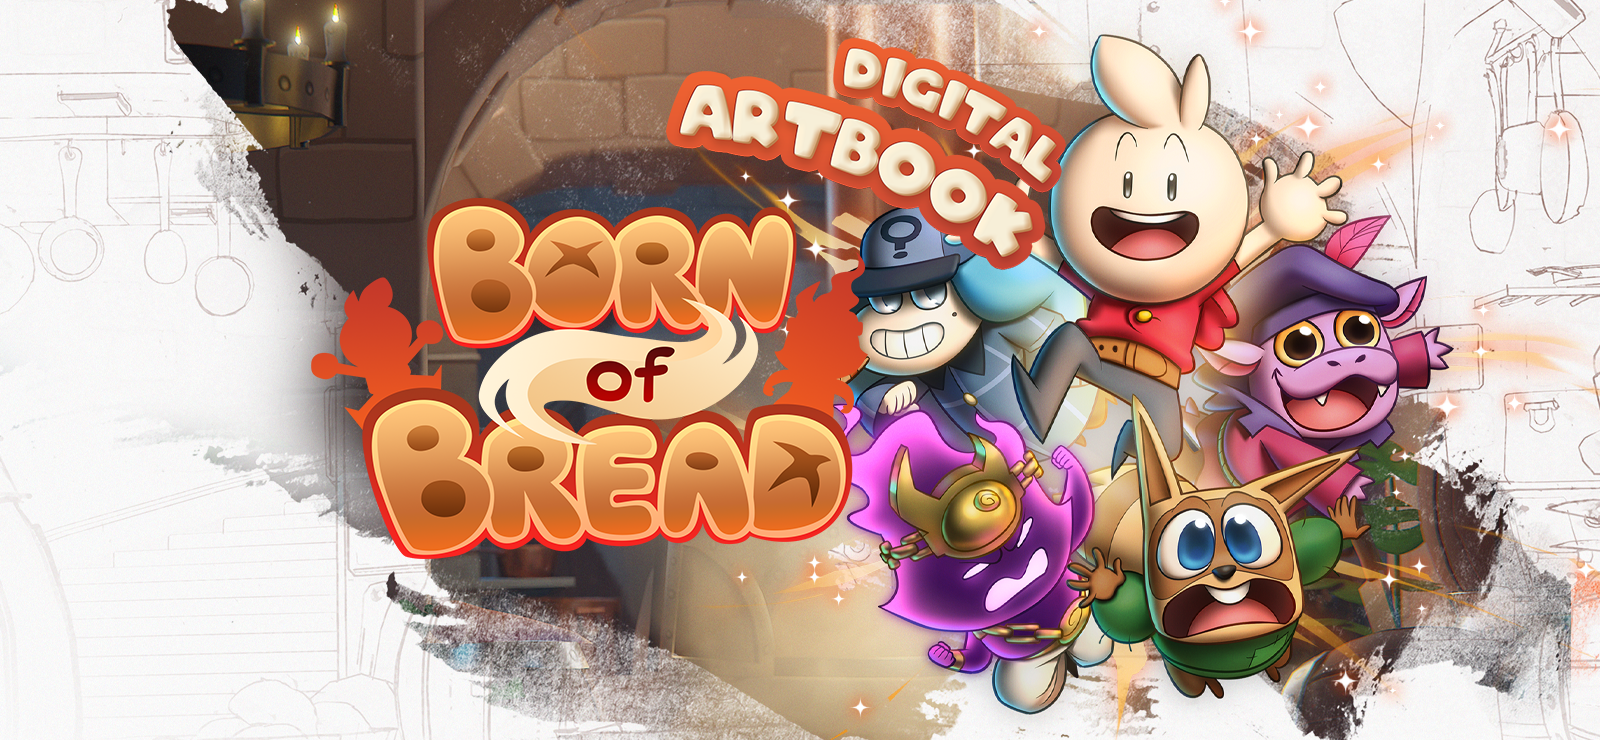 Born Of Bread - Digital Artbook